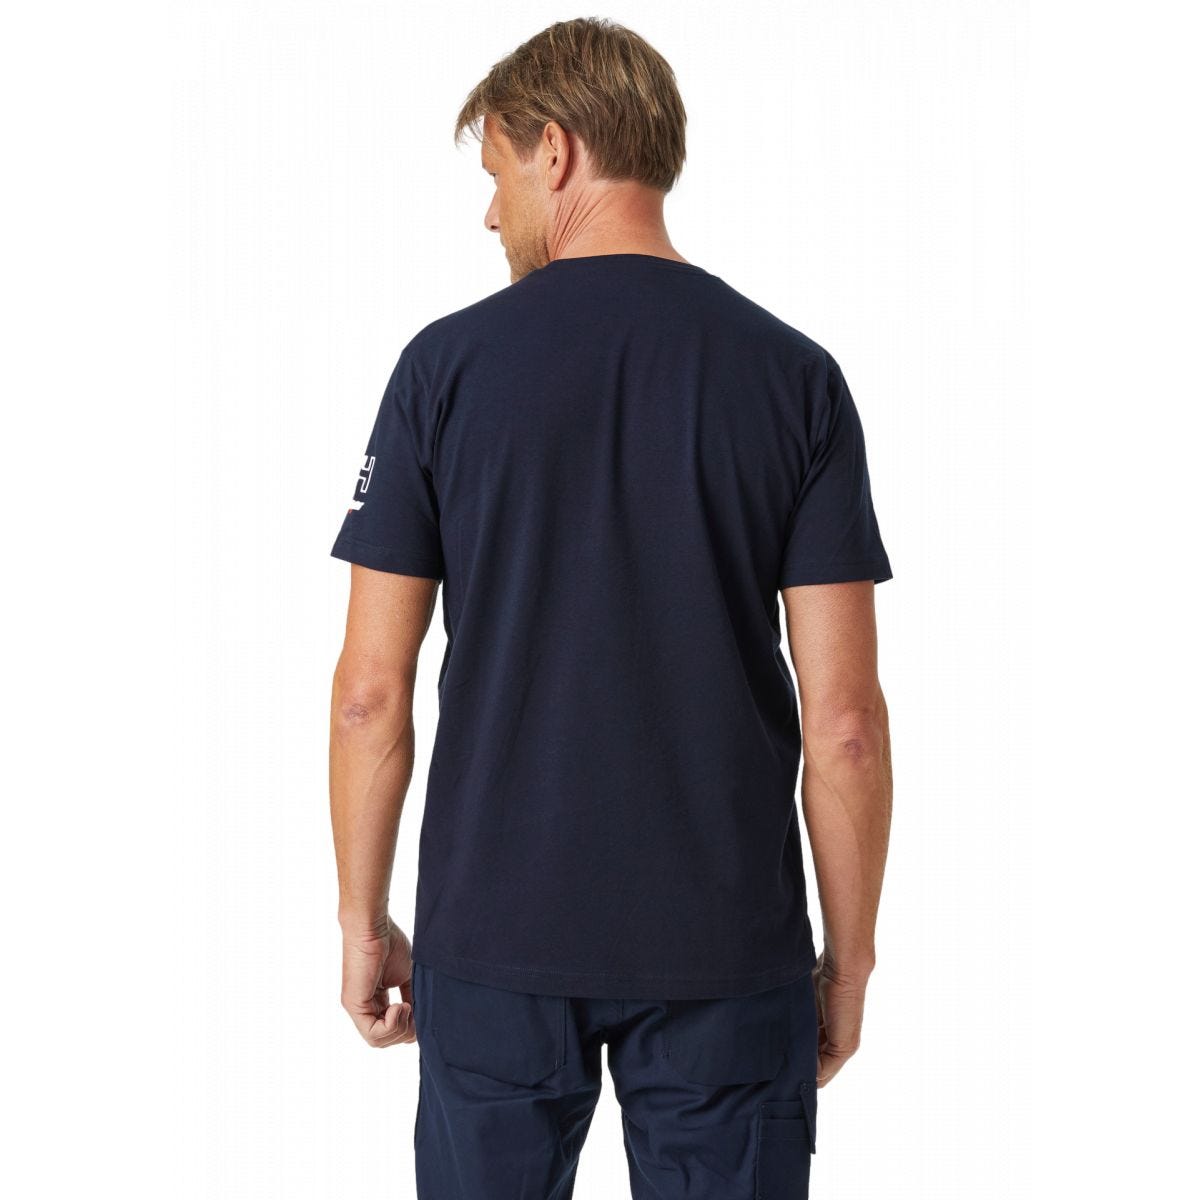 Tee-shirt Kensington Marine - Helly Hansen - Taille 2XL 3